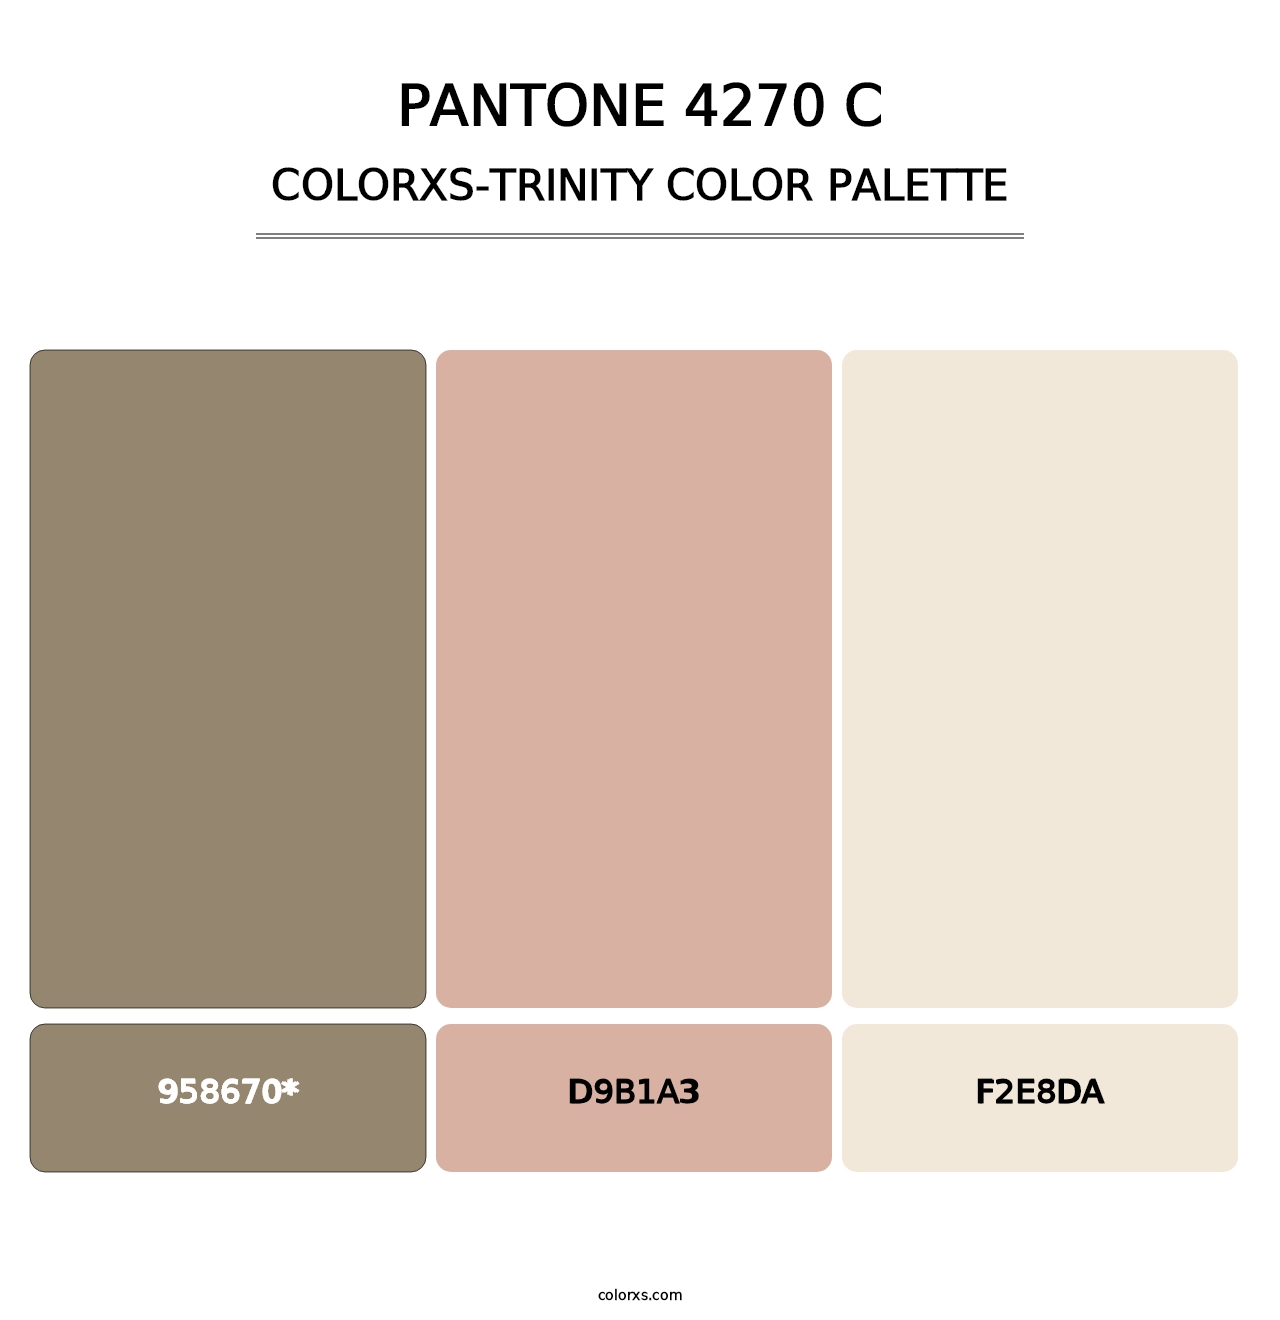 PANTONE 4270 C - Colorxs Trinity Palette